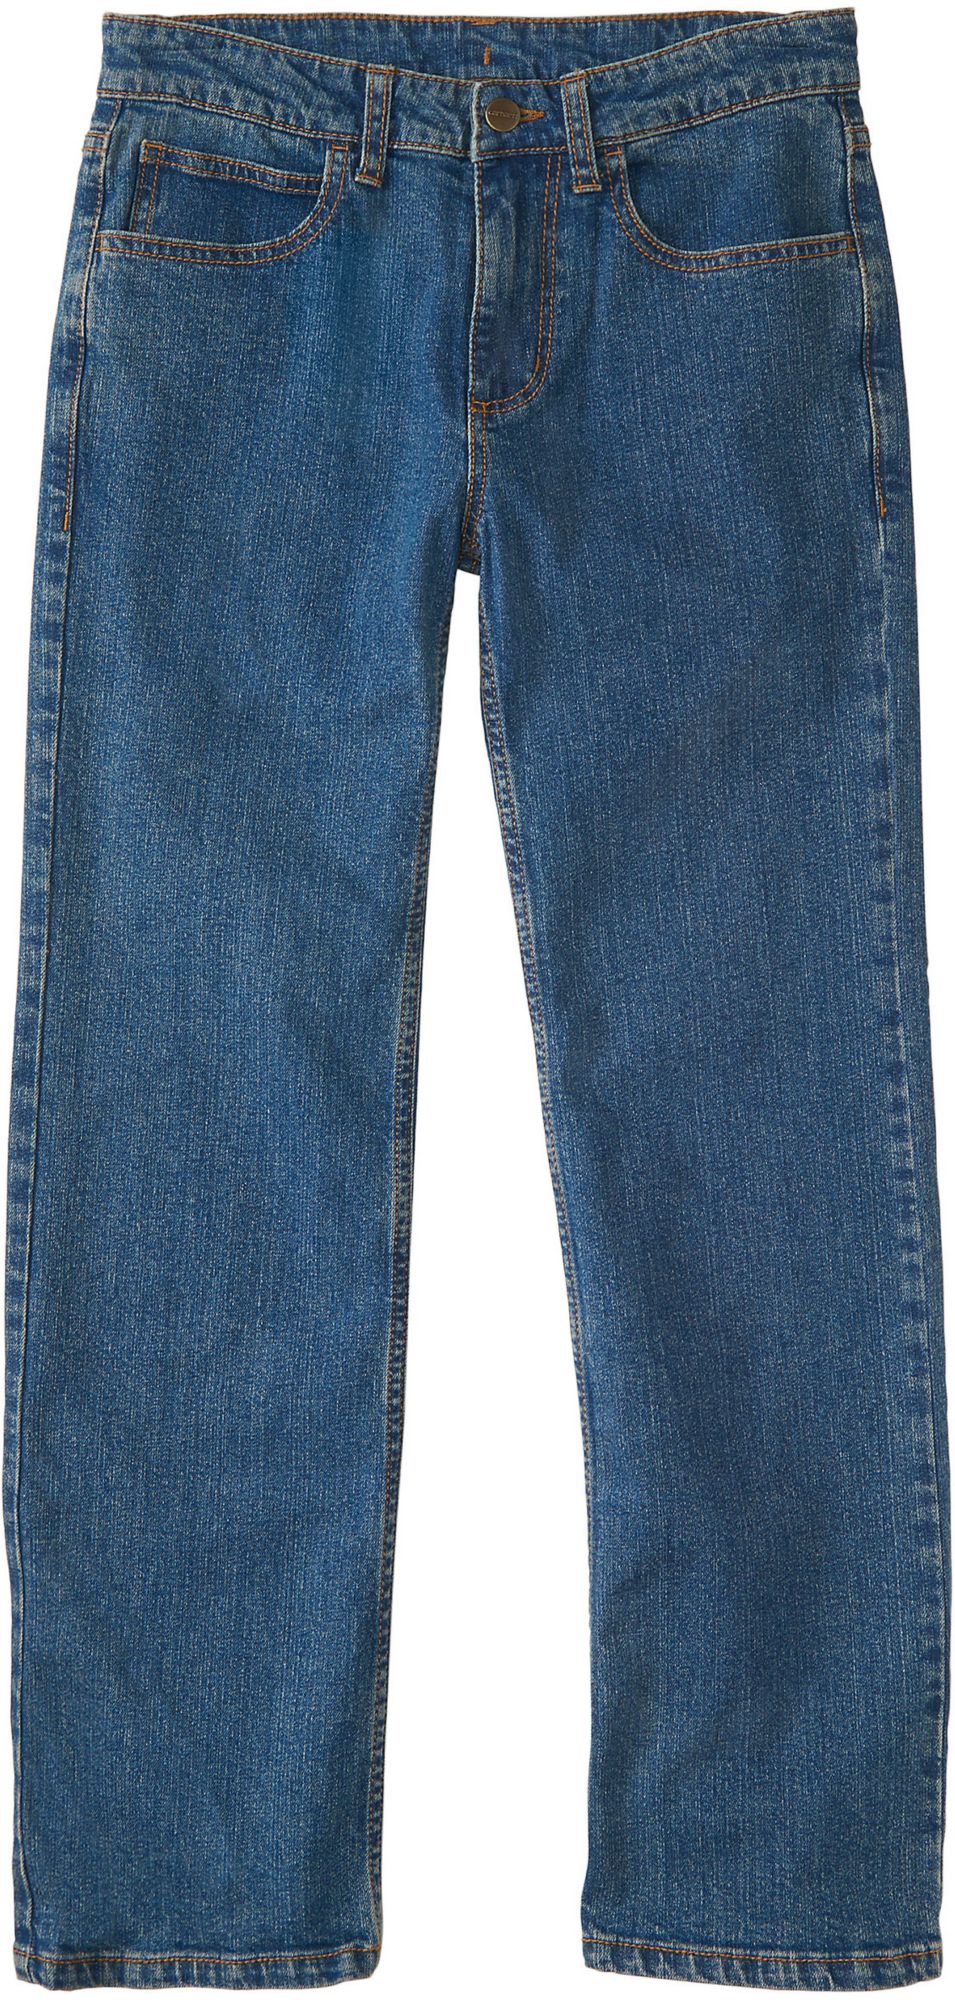 Boys Carhartt Rugged Pocket Bootcut Jeans